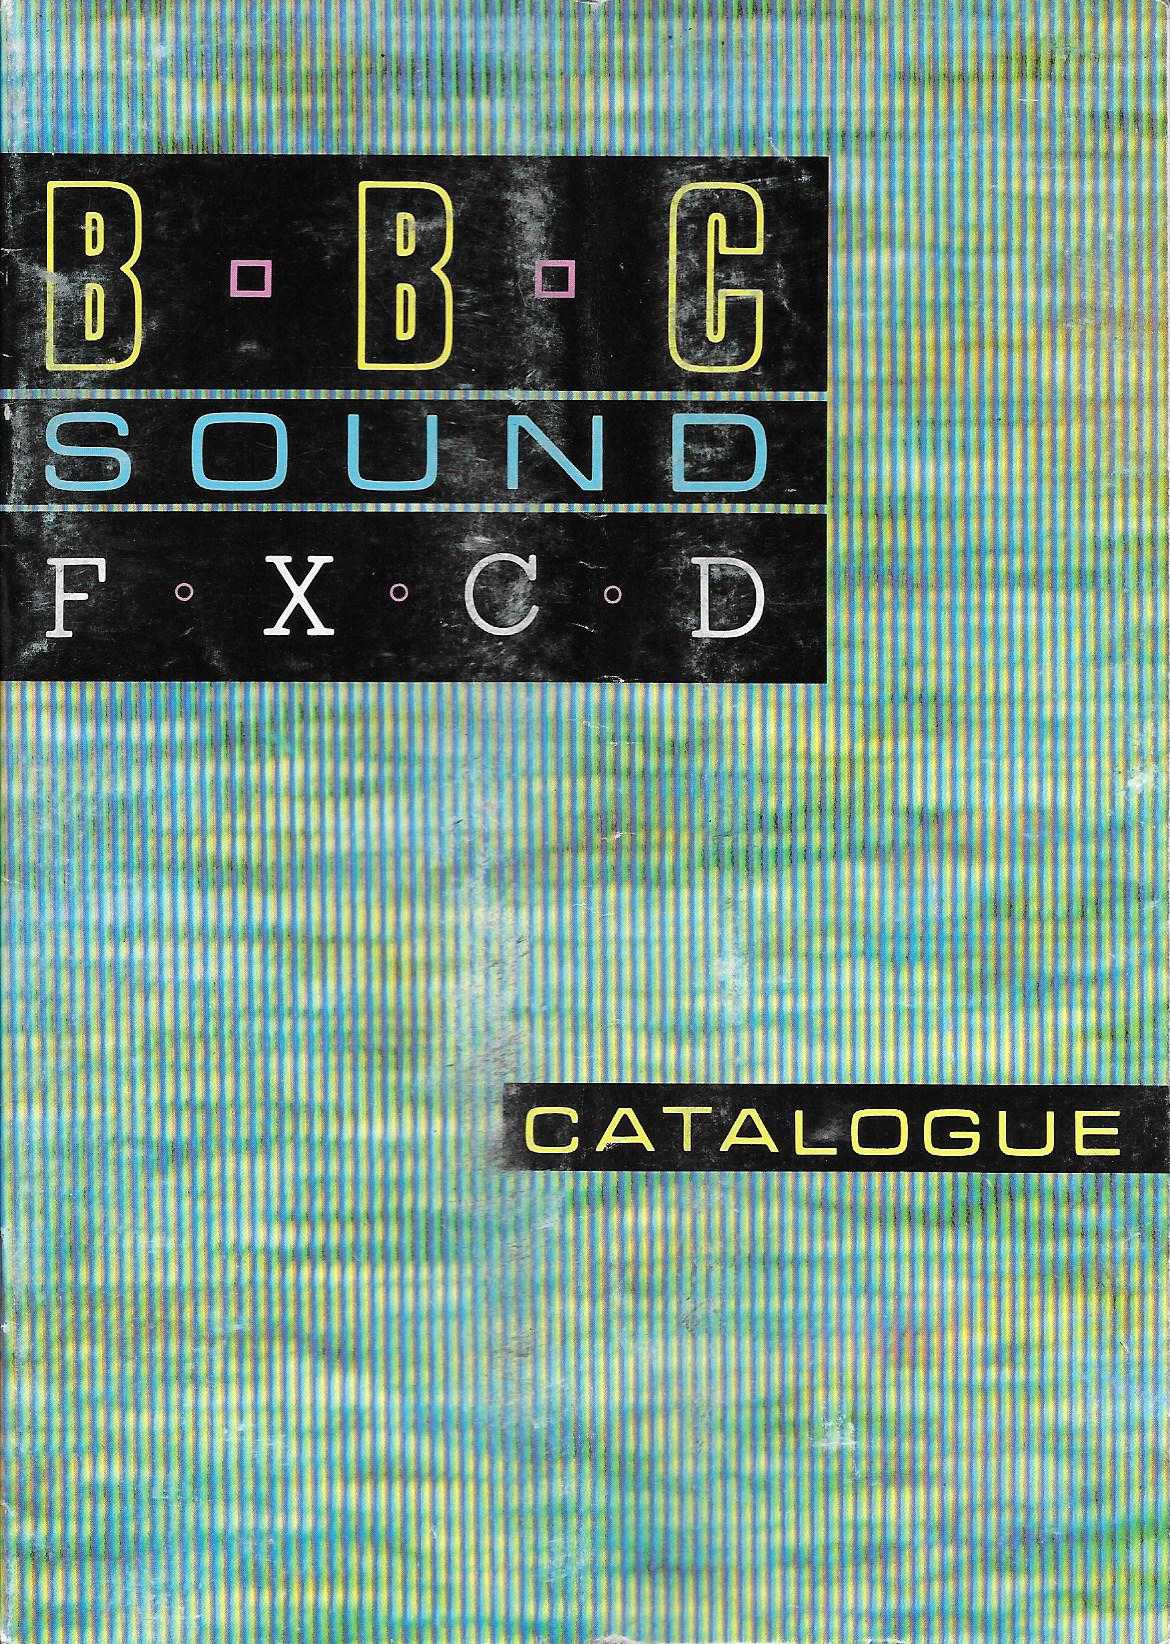 BBC sound effects catalogue 1988.